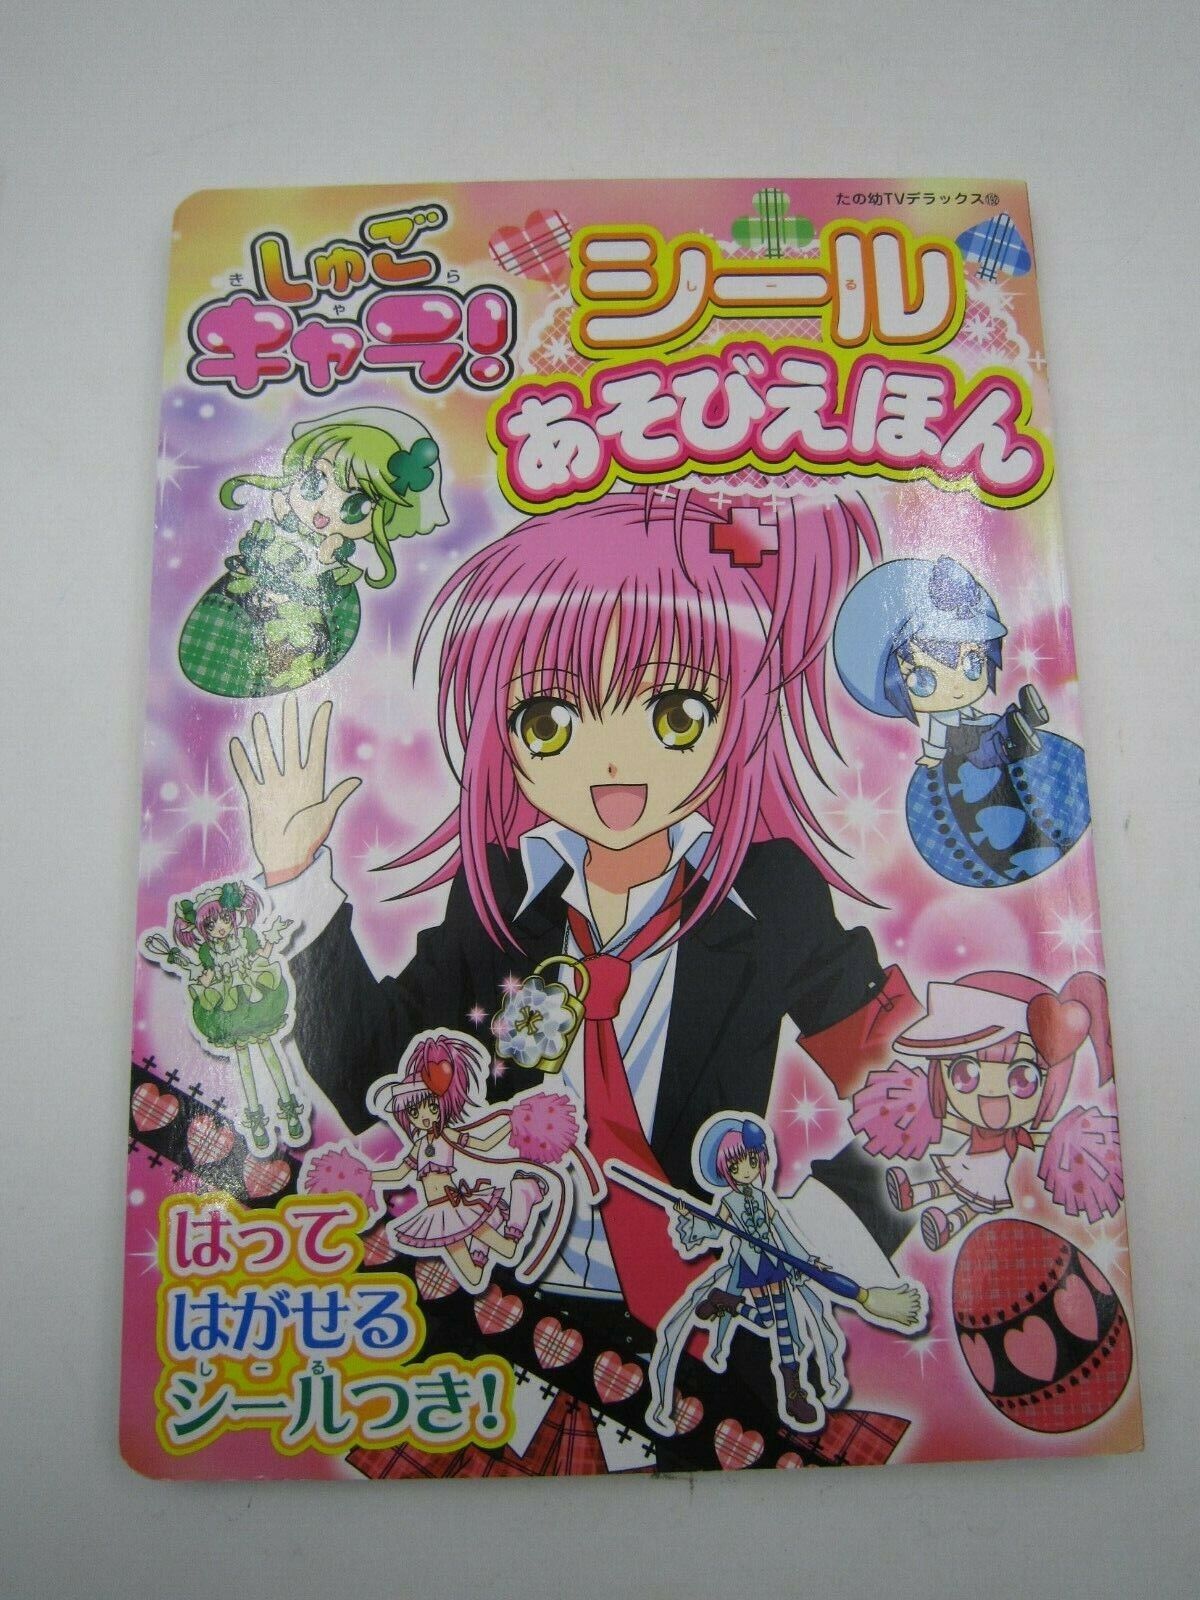 Anime Manga Shugo Chara Seal Sticker Play Book Kodansha Japan Peach-Pit USED